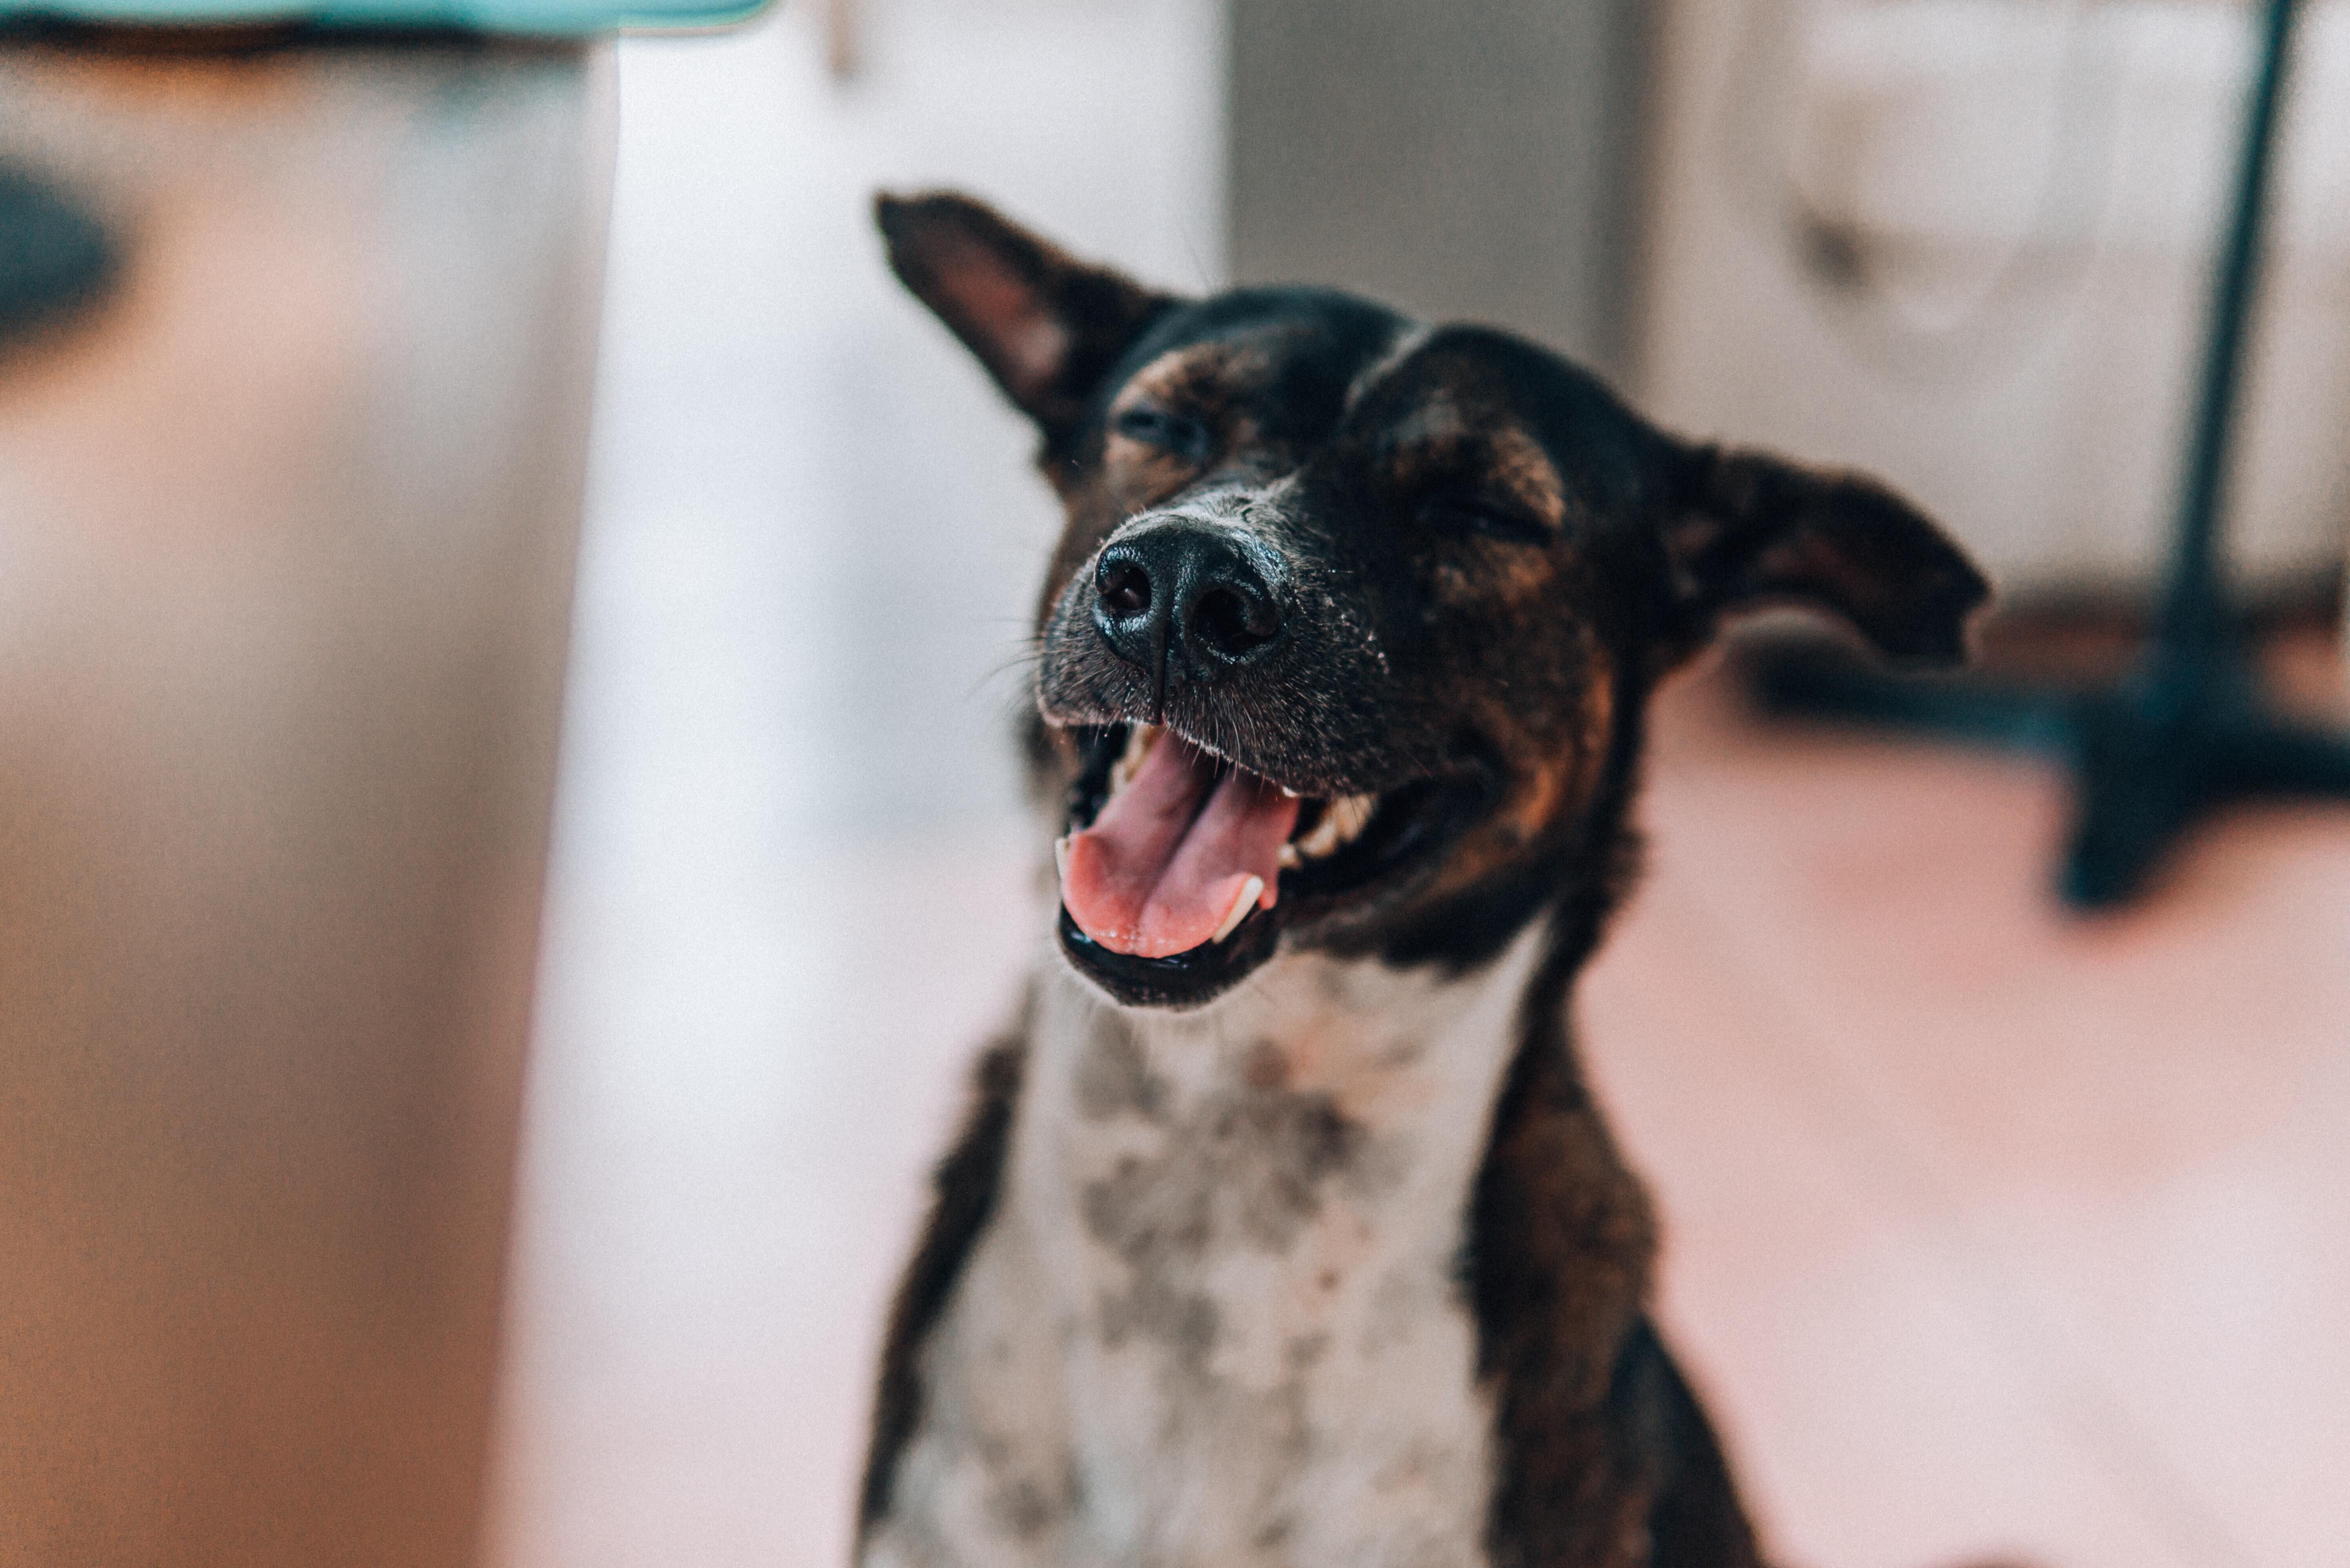 Rover, Luna, Fido, Max: What Makes a Good Dog Name?